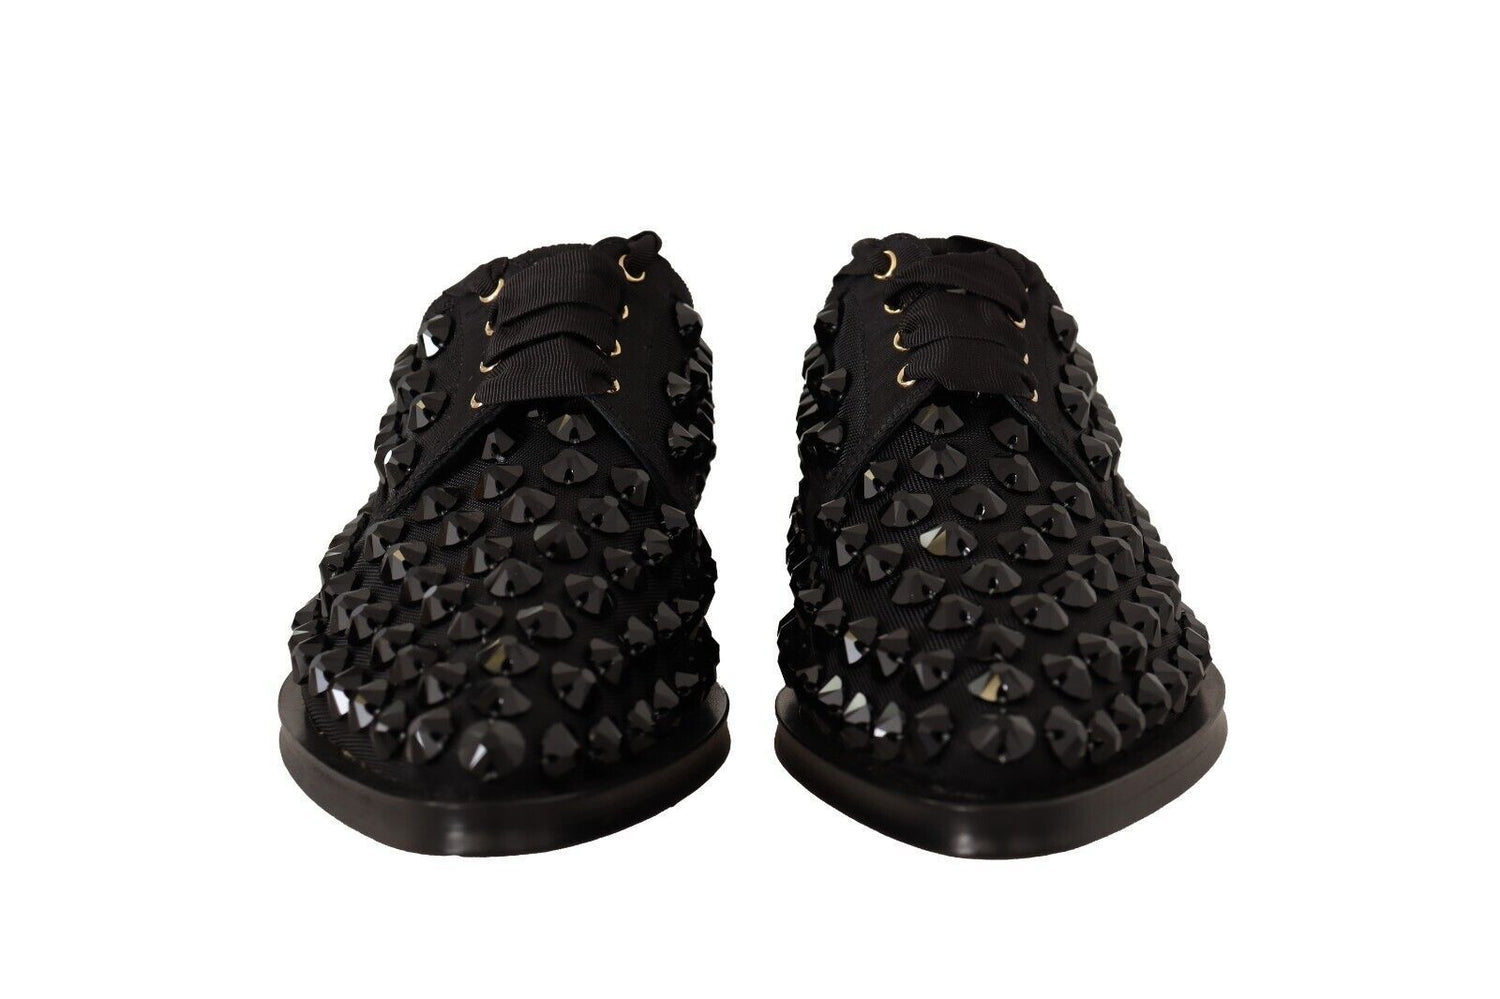 Dolce & Gabbana Black Lace Up Studded Formal Flats Shoes - DEA STILOSA MILANO